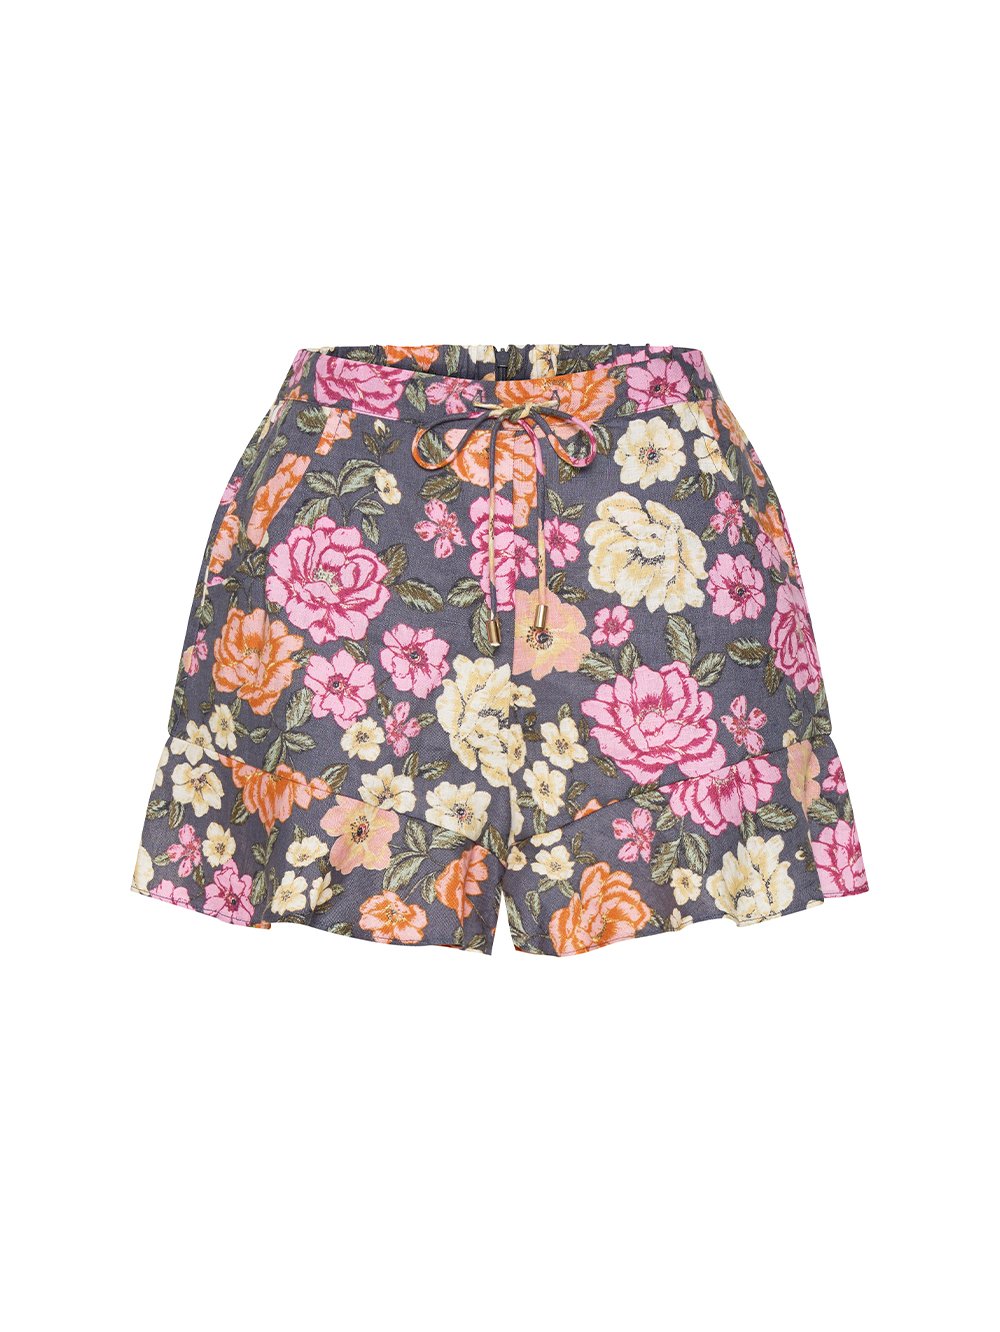 Kivari Skirts and Shorts | Buy Effortless Bottoms Online – KIVARI